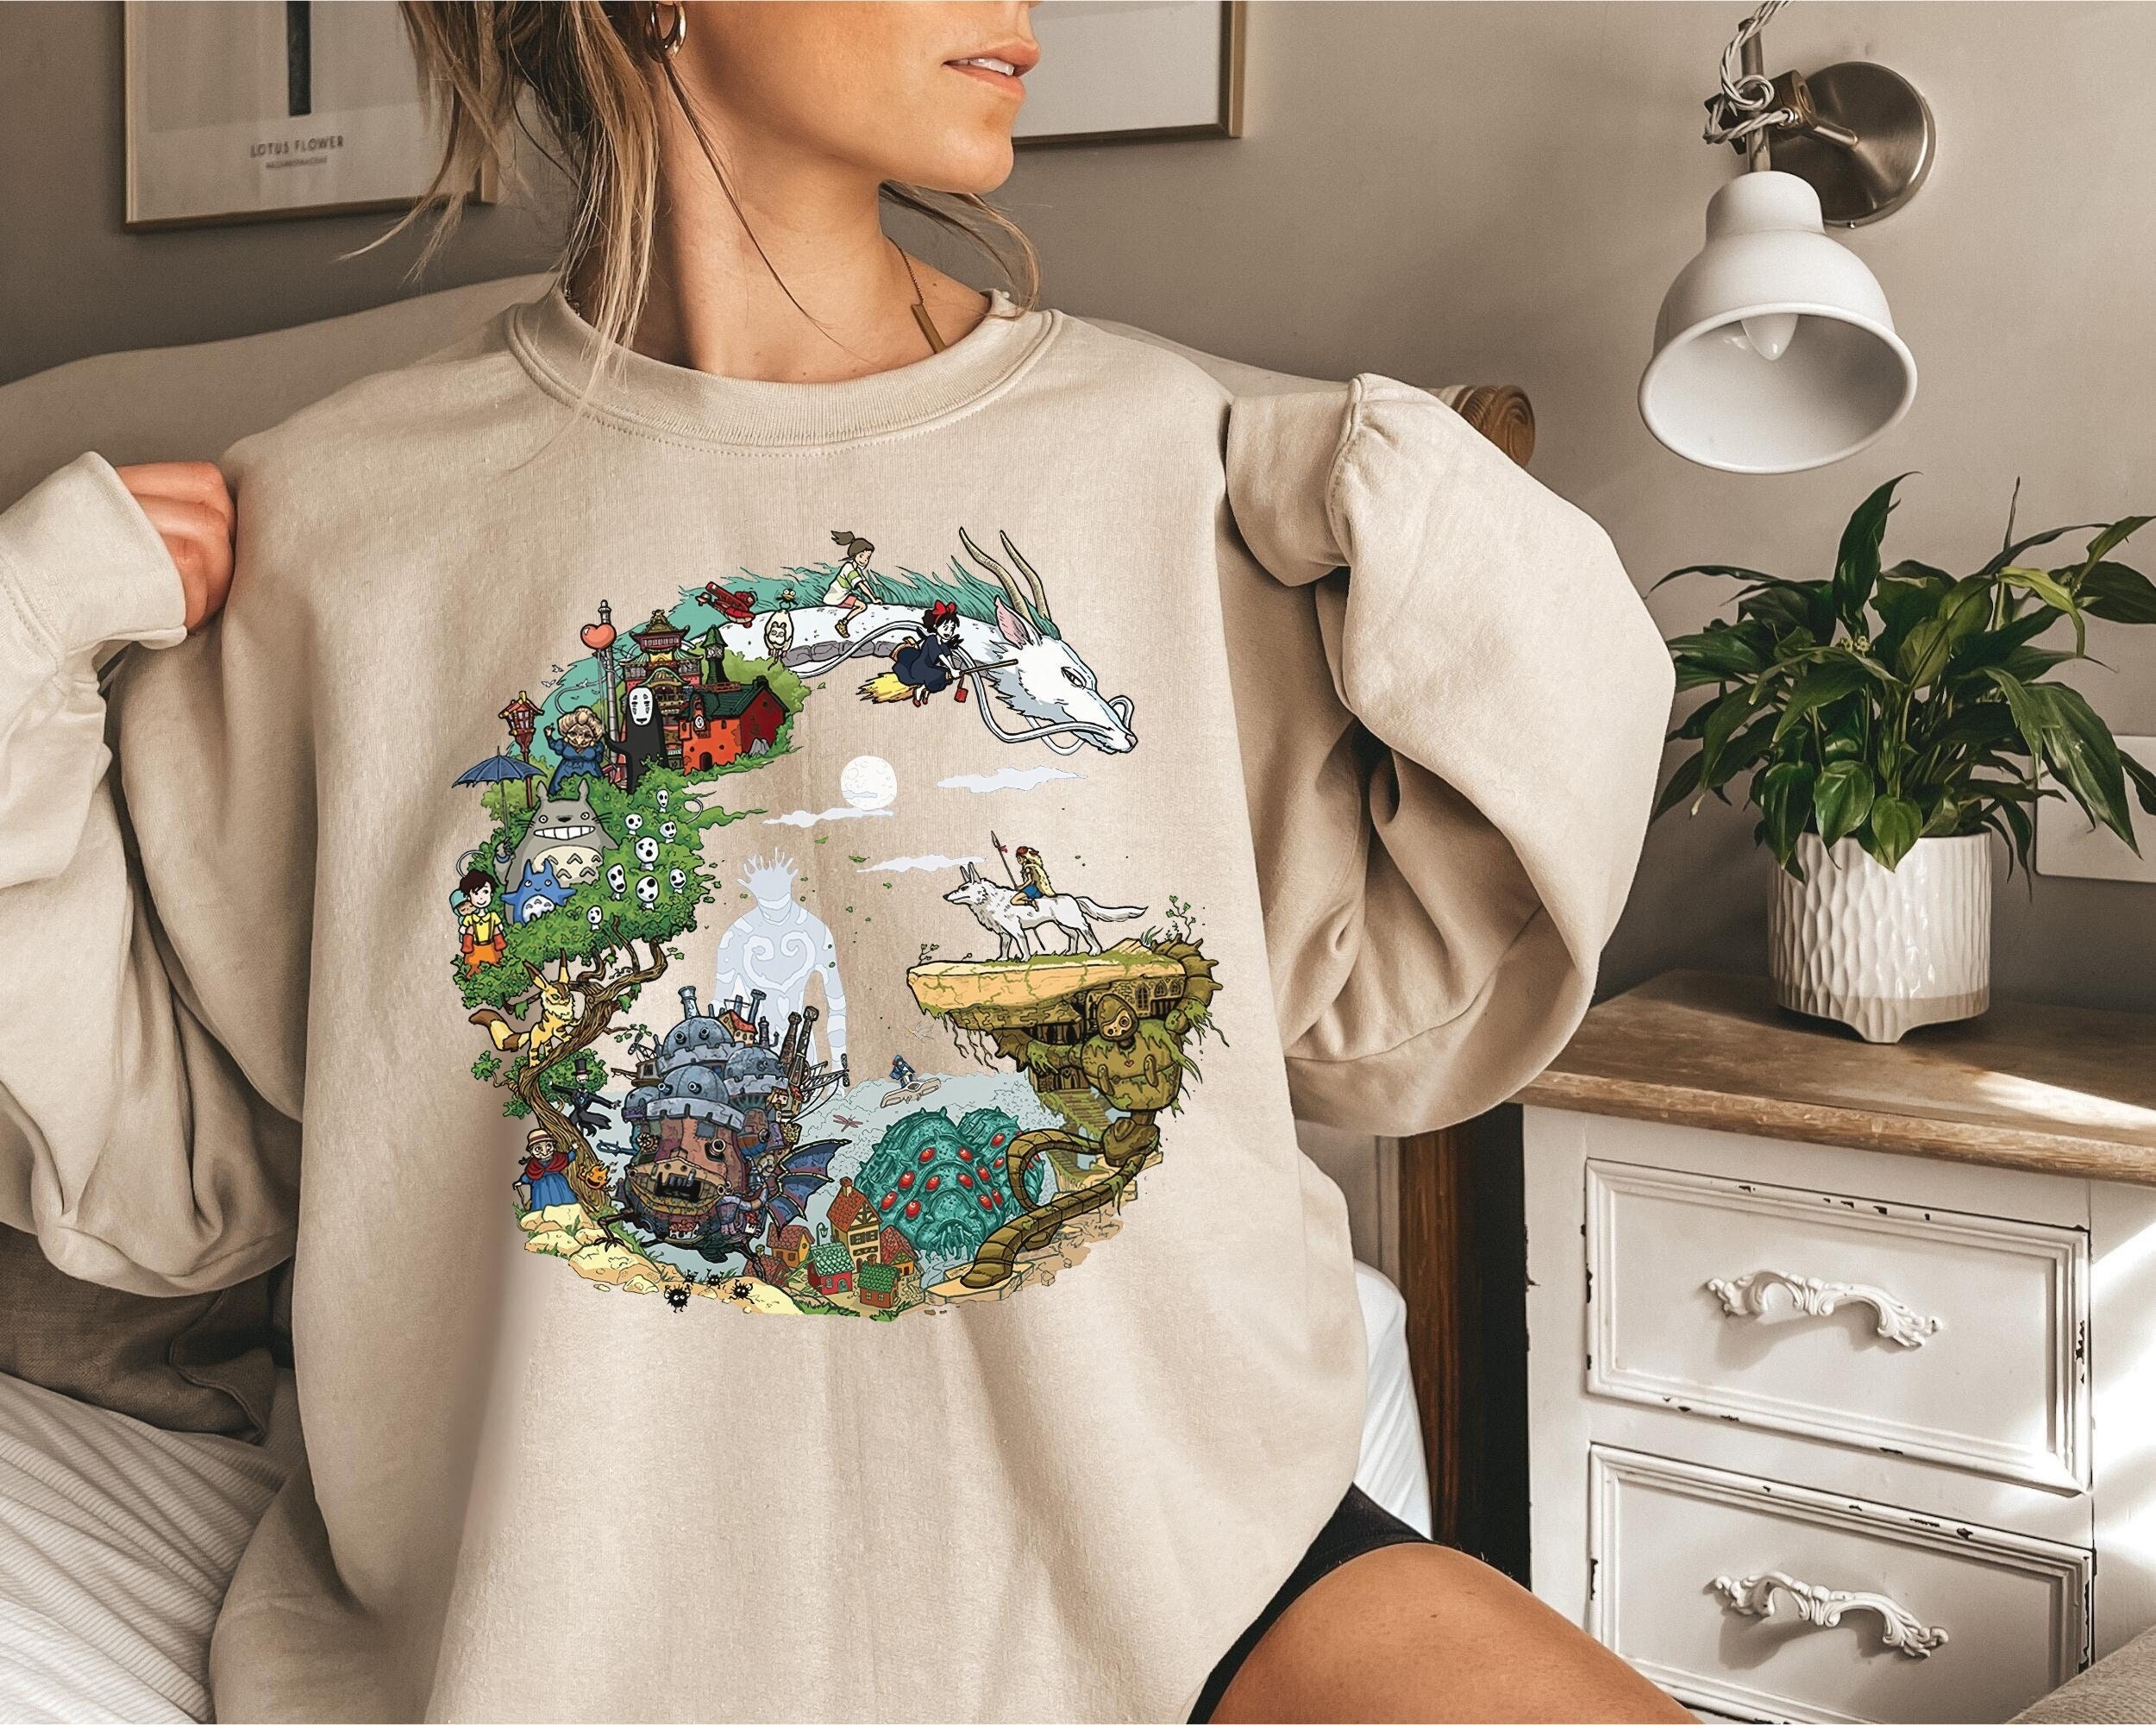 Spirited Away Embroidered Tapestry Crewneck Sweater Shirt ft Chihiro, No Face, Haku Studio Ghibli Merch Decor Christmas Gift